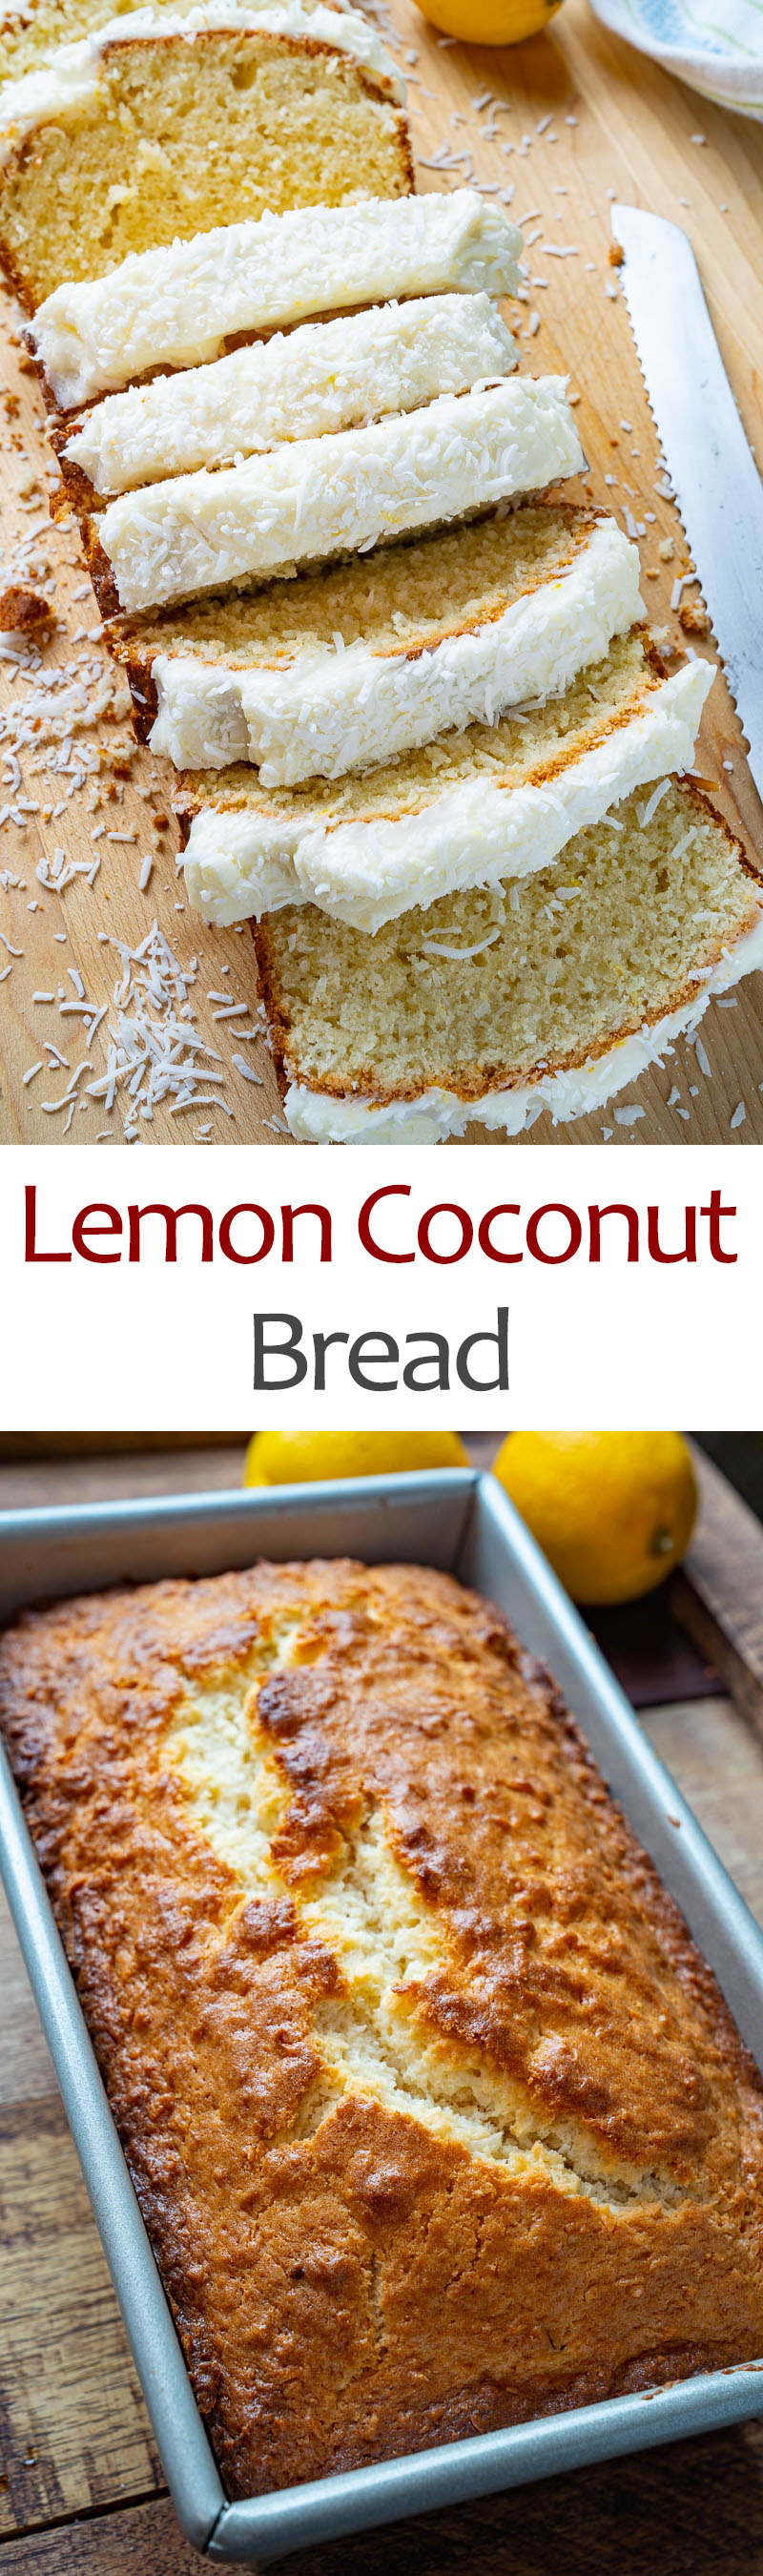 Lemon Coconut Bread